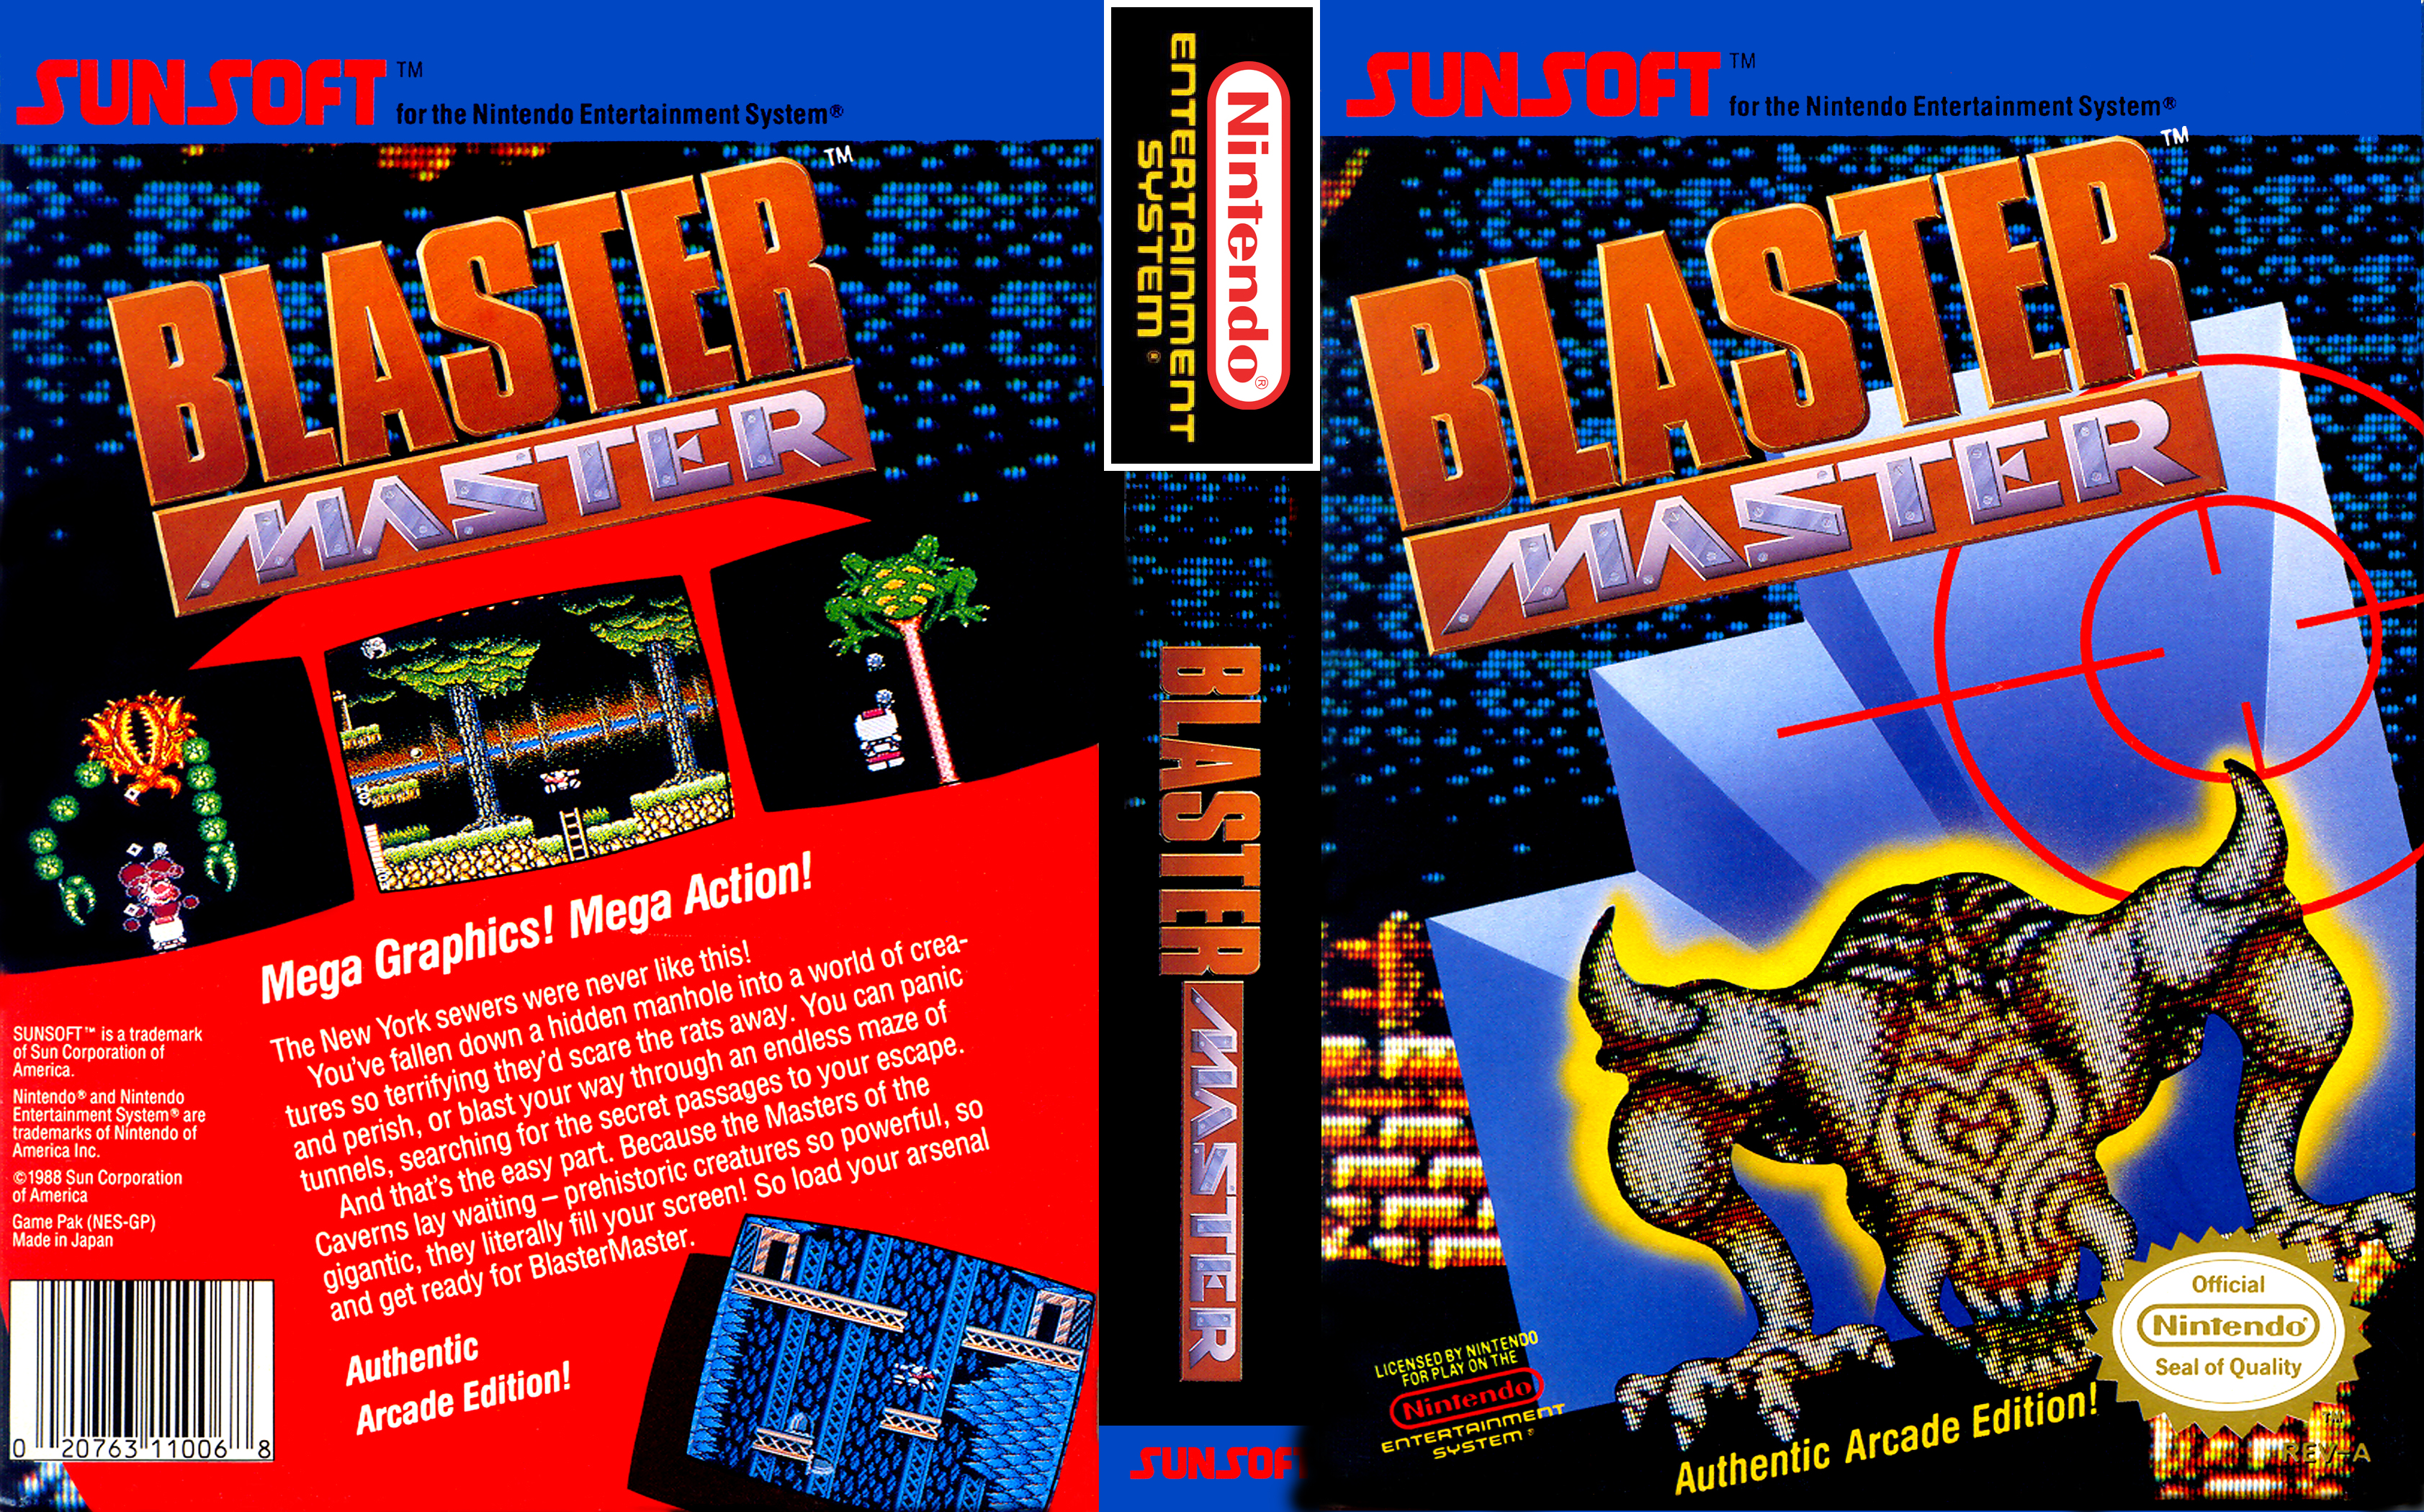 Blastermaster